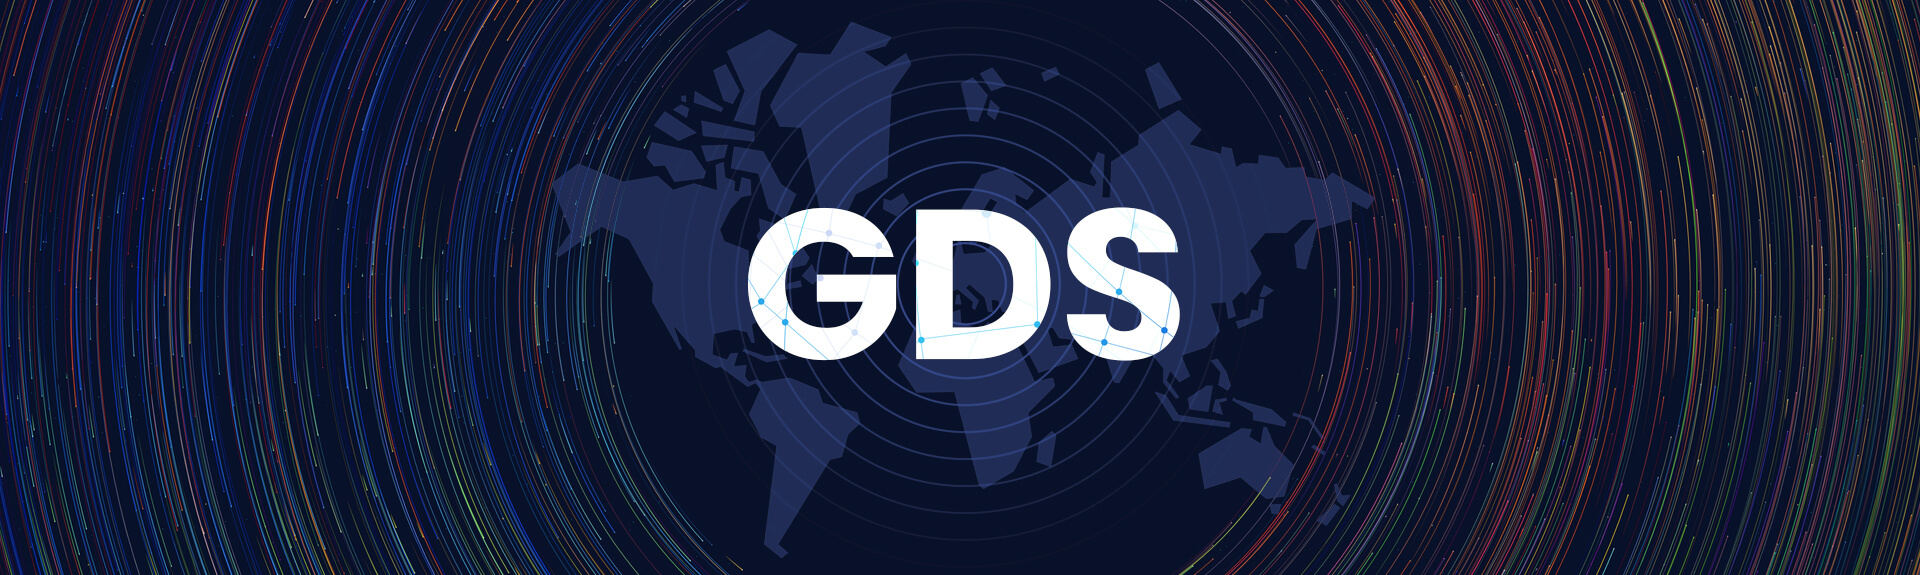 Gds logo and brand | Logo & brand identity pack contest | 99designs